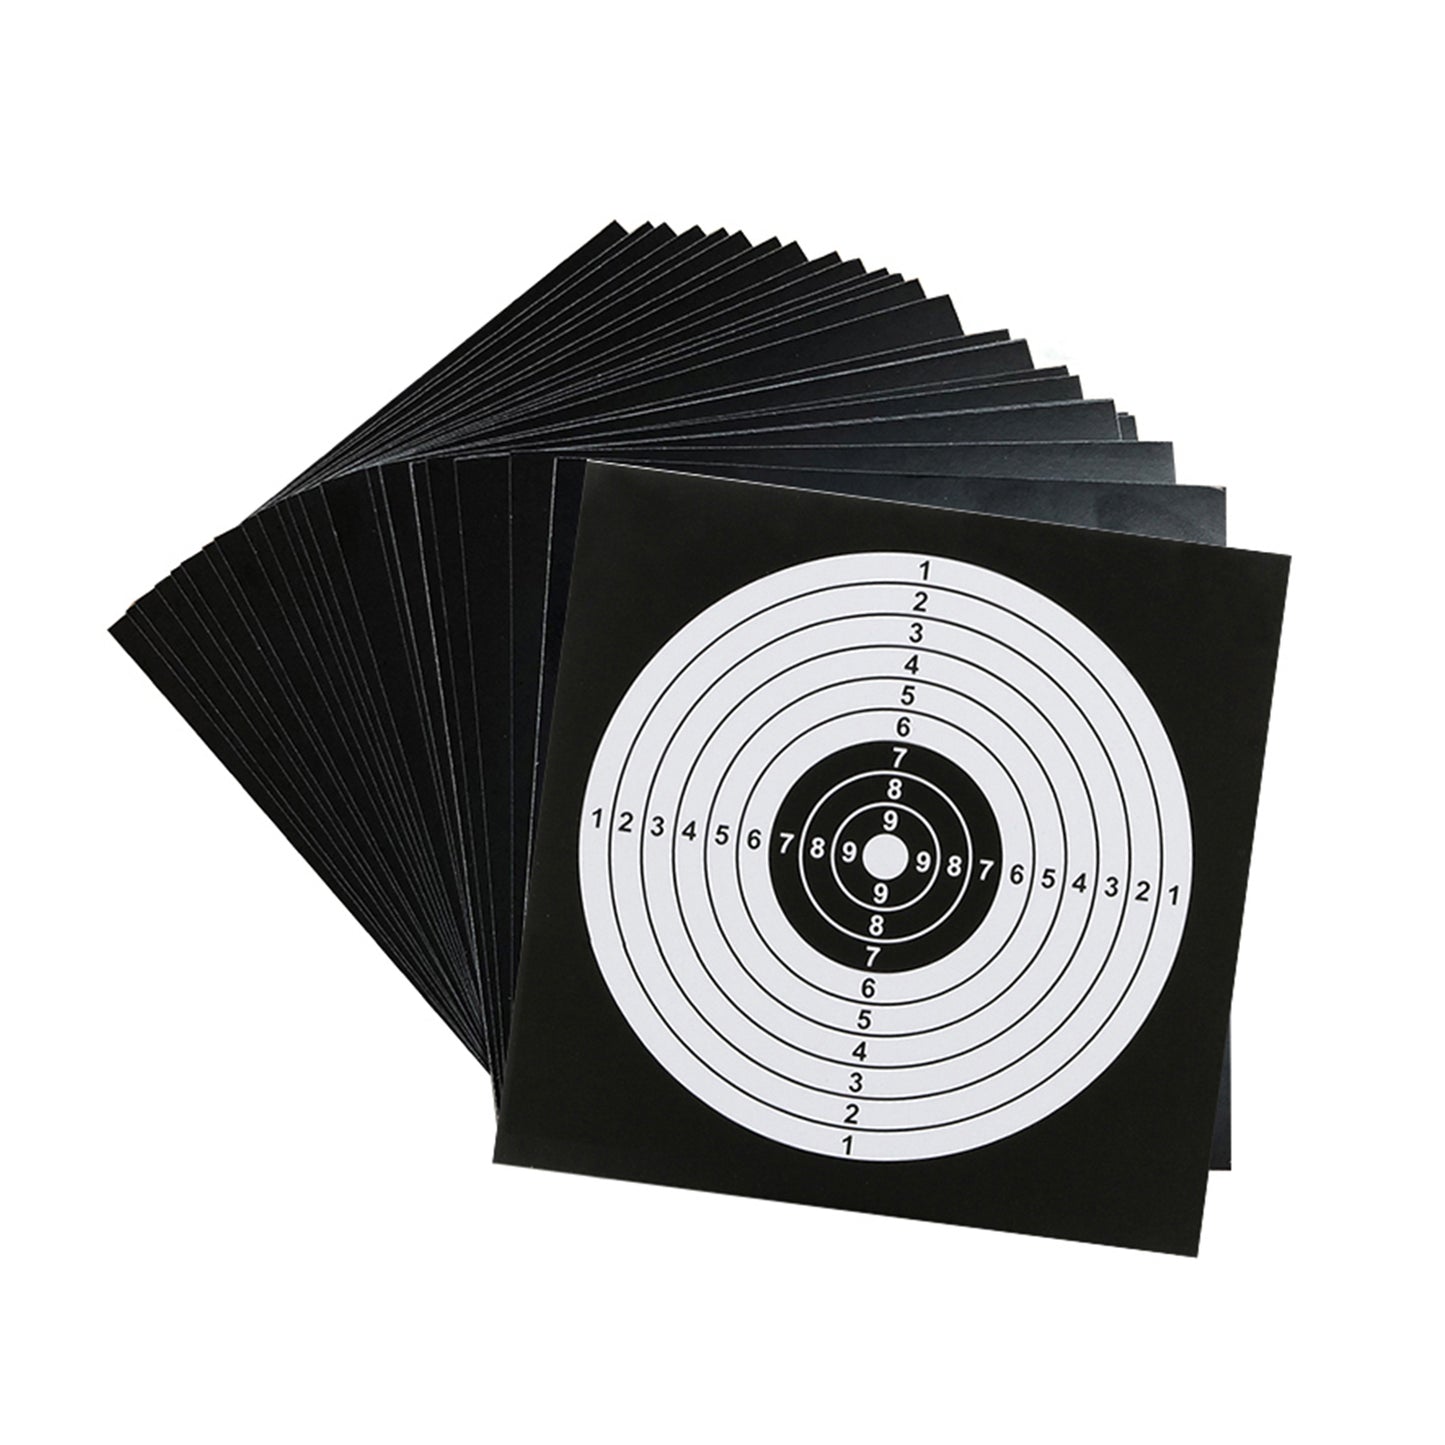 14*14cm 100pcs/bag Black White Ring Non Adhesive Cone Trap Cardboard Paper Shooting Targets